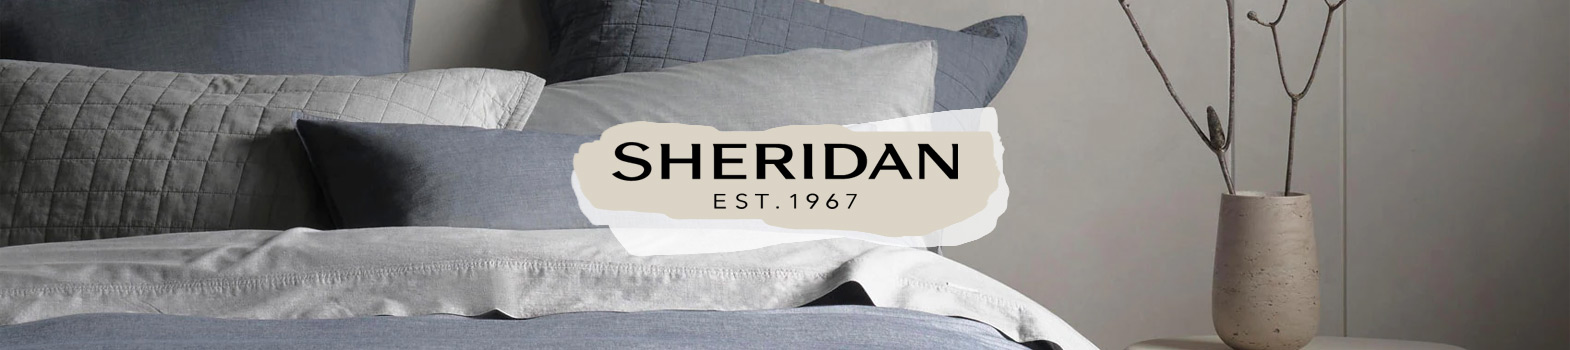 Sheridan Sheets, Towels & More